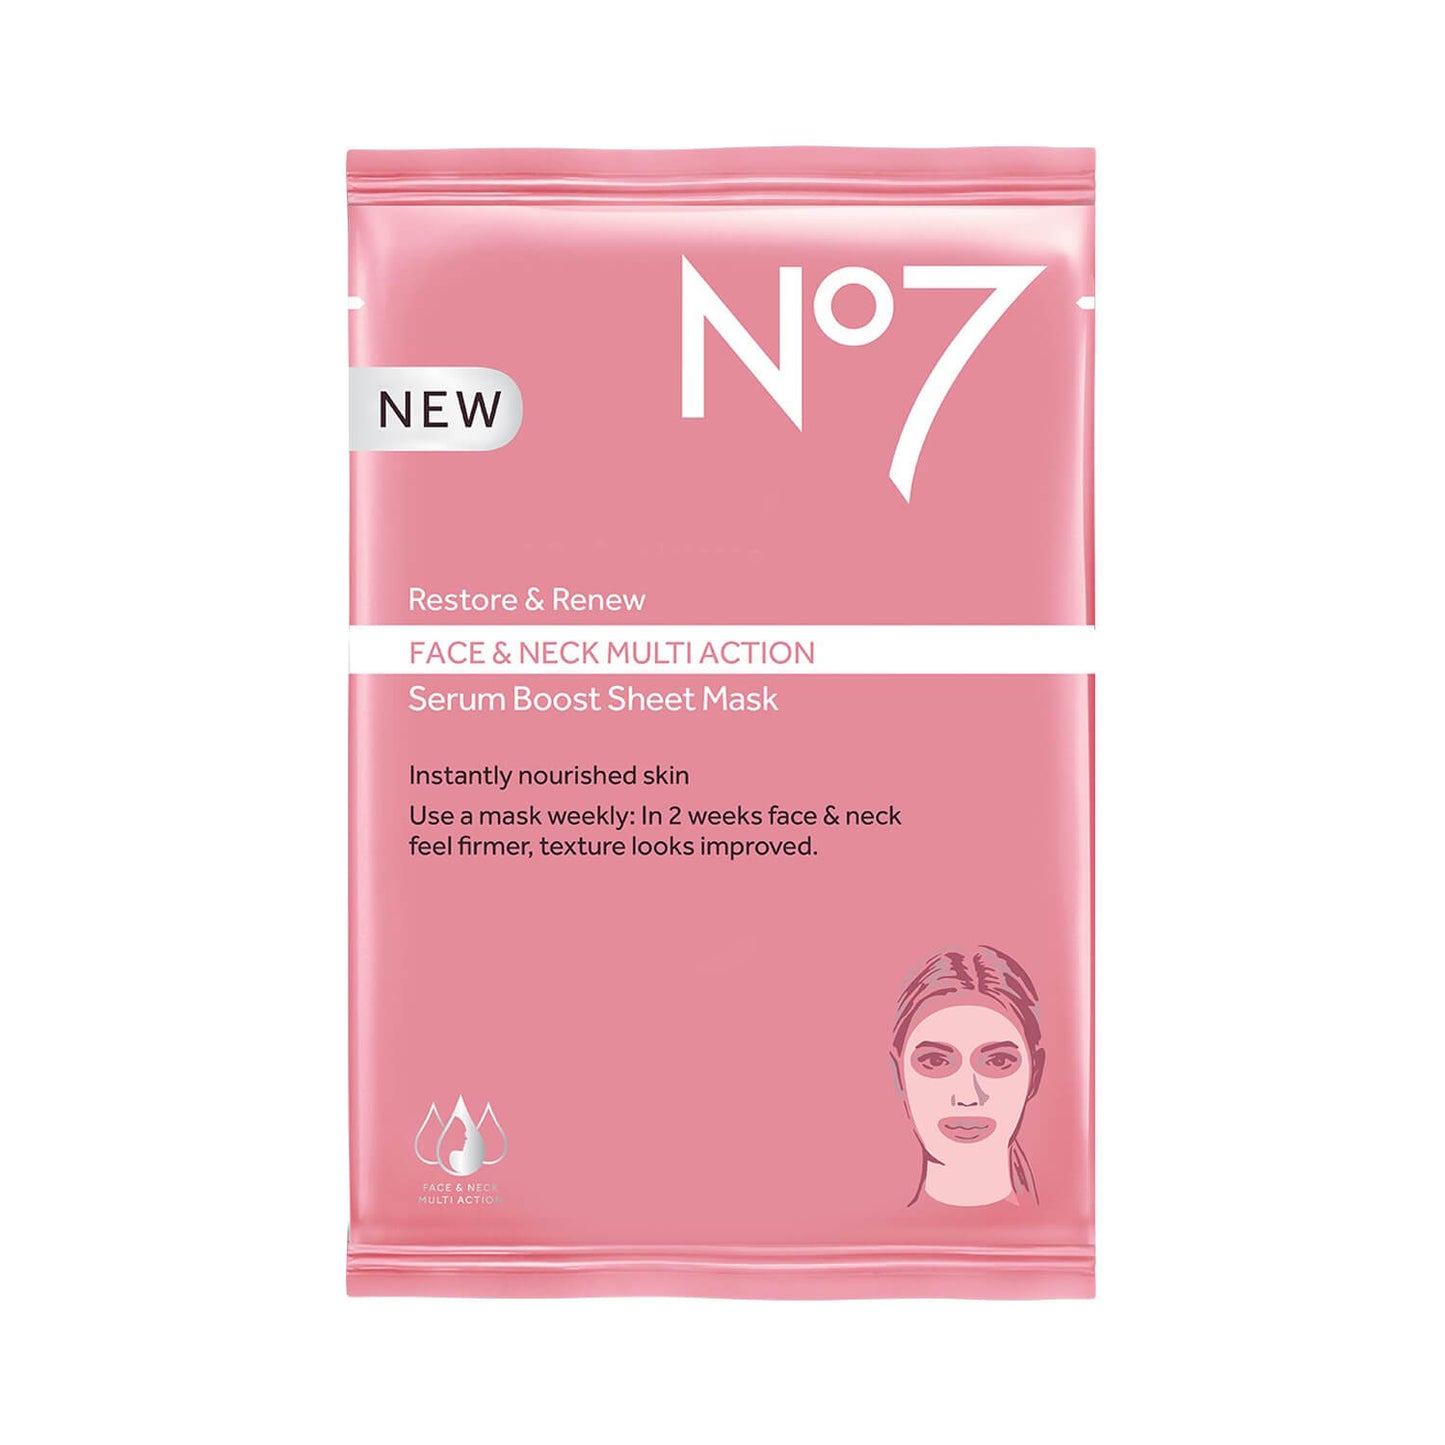 No7 Restore & Renew Face Neck Multi Action Serum Boost Sheet Mask